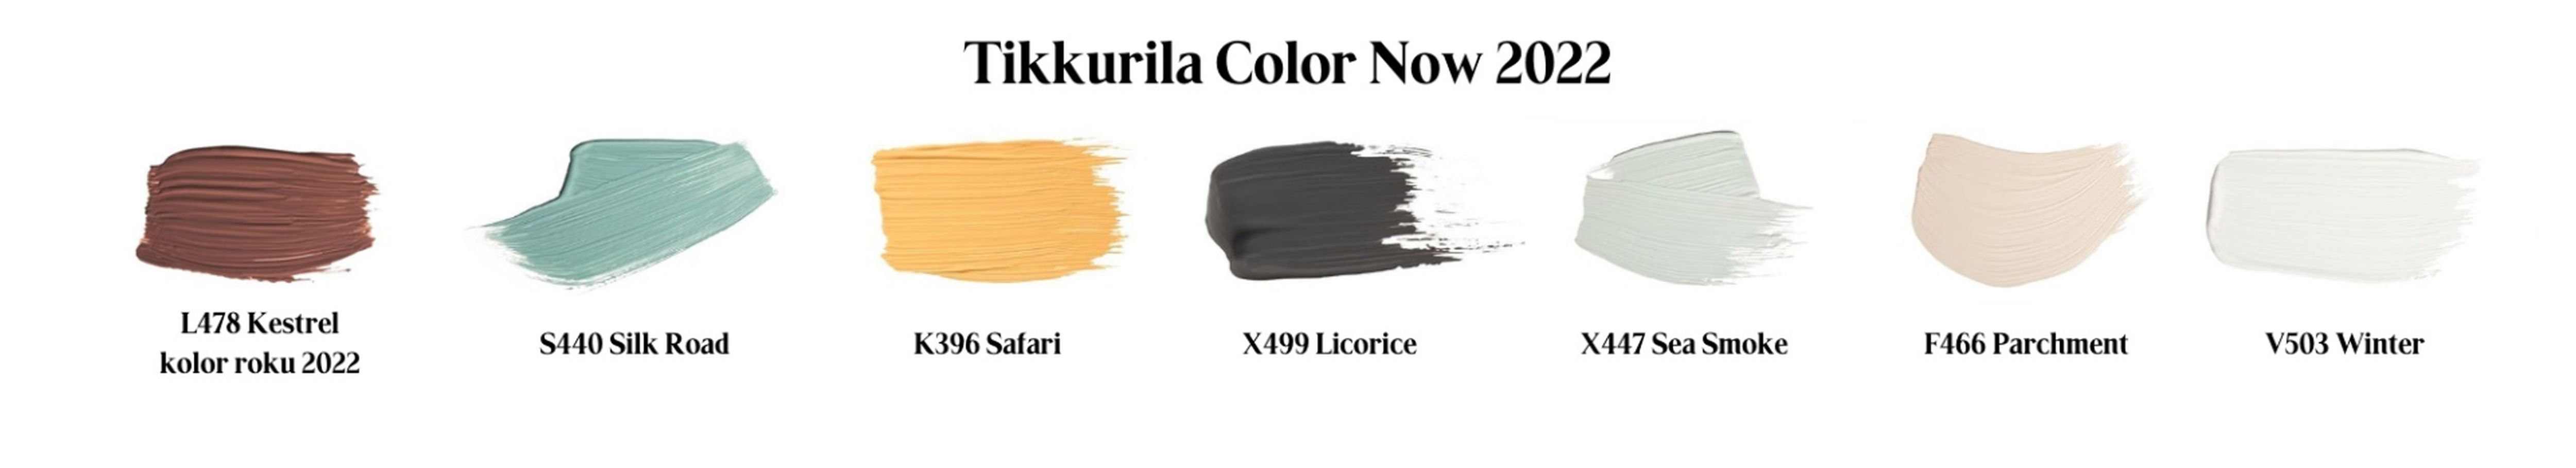 Kolekcja Color Now 2022 - takie kolory proponuje marka Tikkurila na 2022 rok.Fot. mat. prasowe Tikkurila